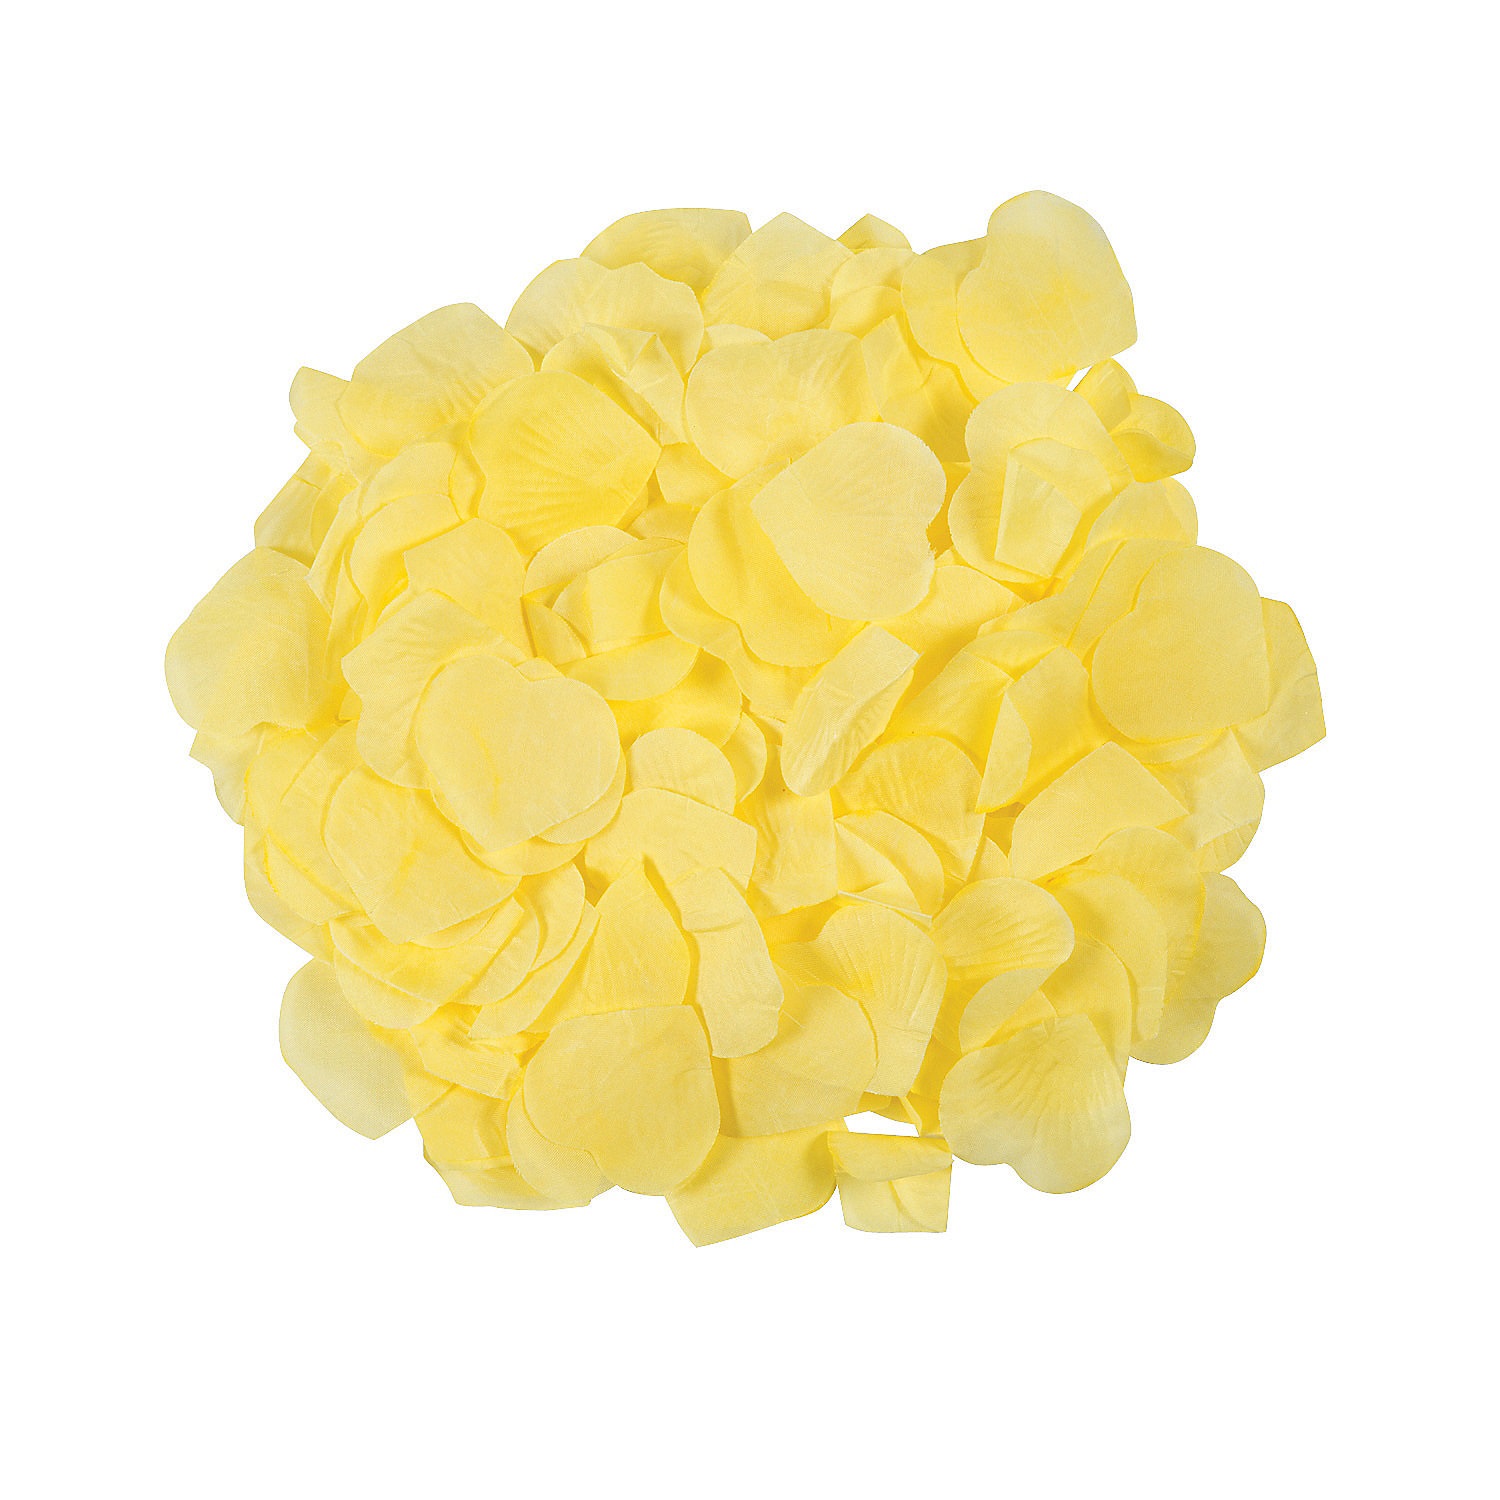 yellow-rose-petals_3_573